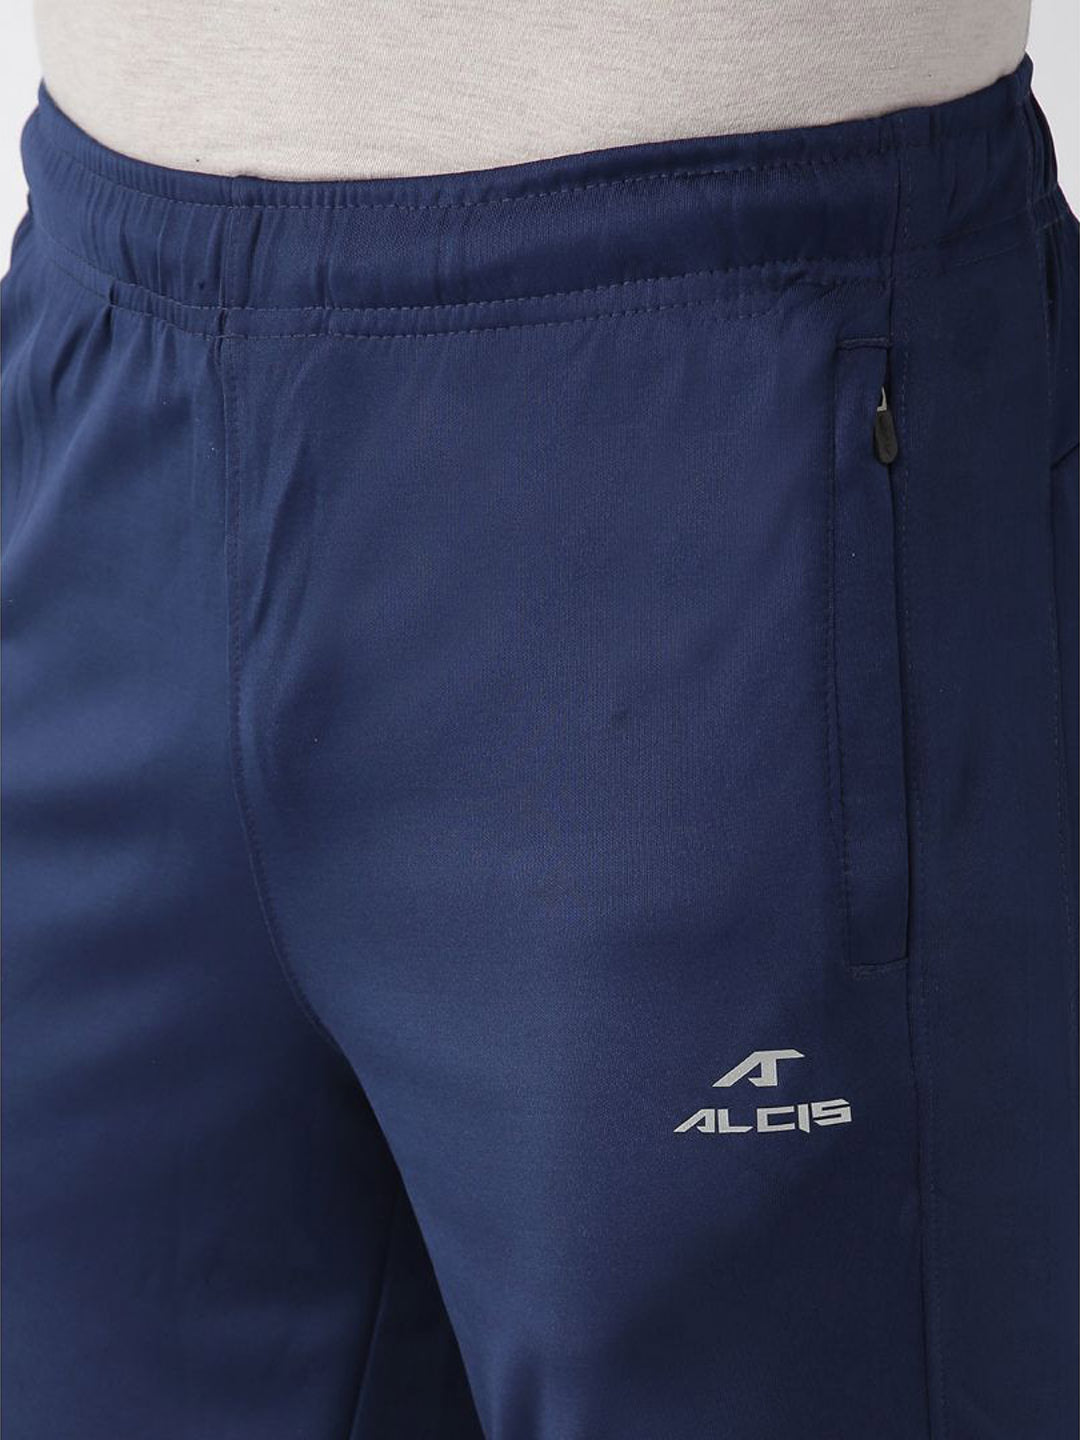 Alcis Men Navy Blue Solid Slim Fit Joggers